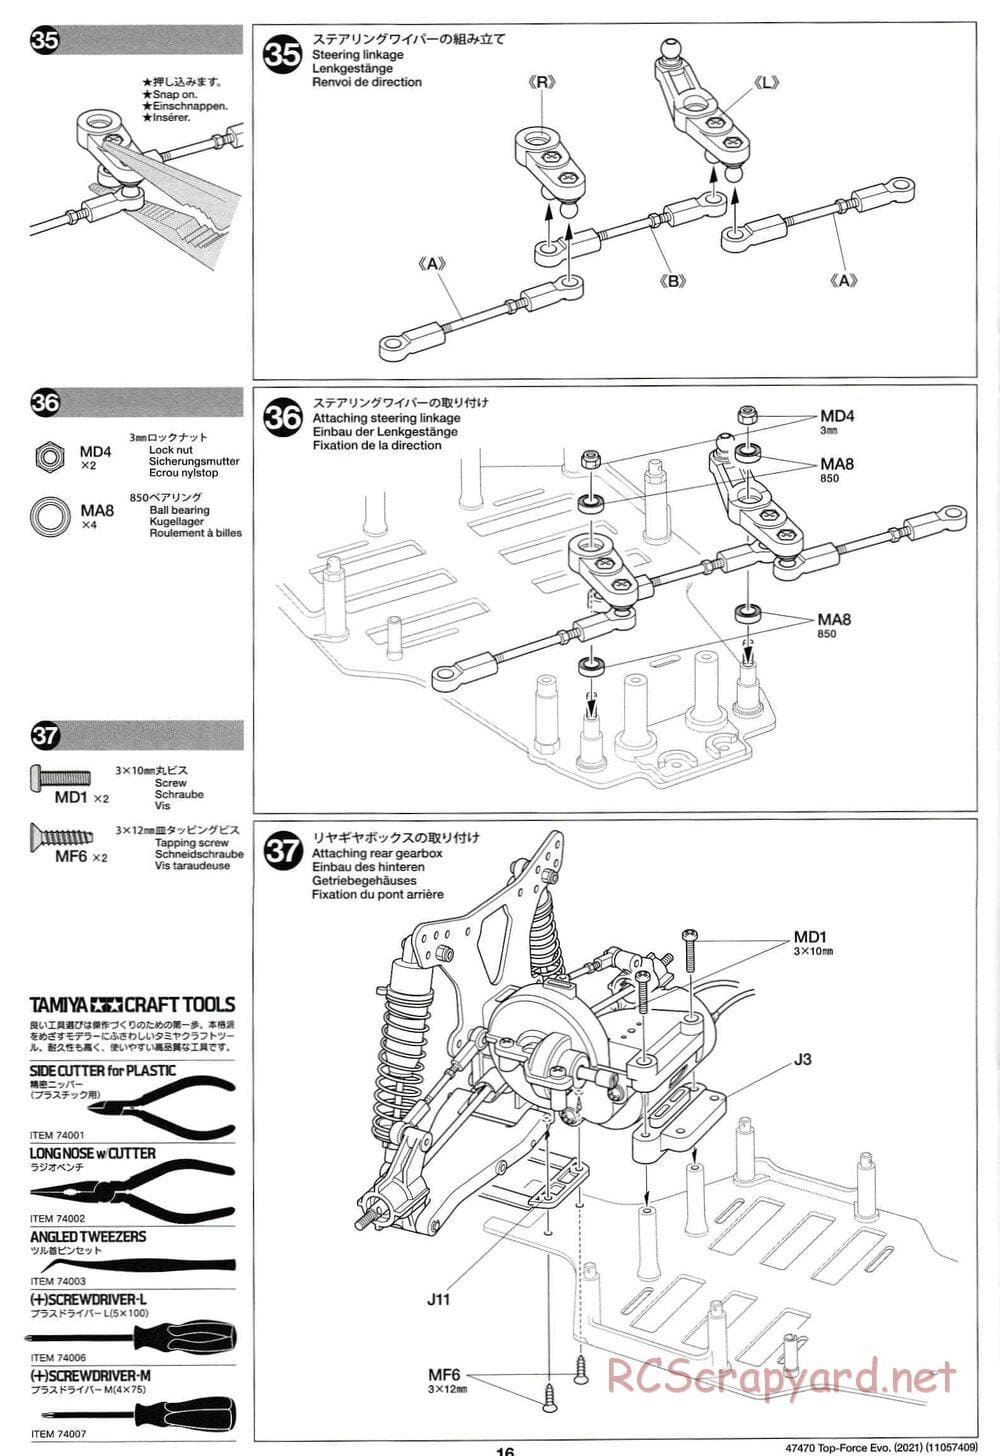 Tamiya - Top Force Evo 2021 - DF-01 Chassis - Manual - Page 16